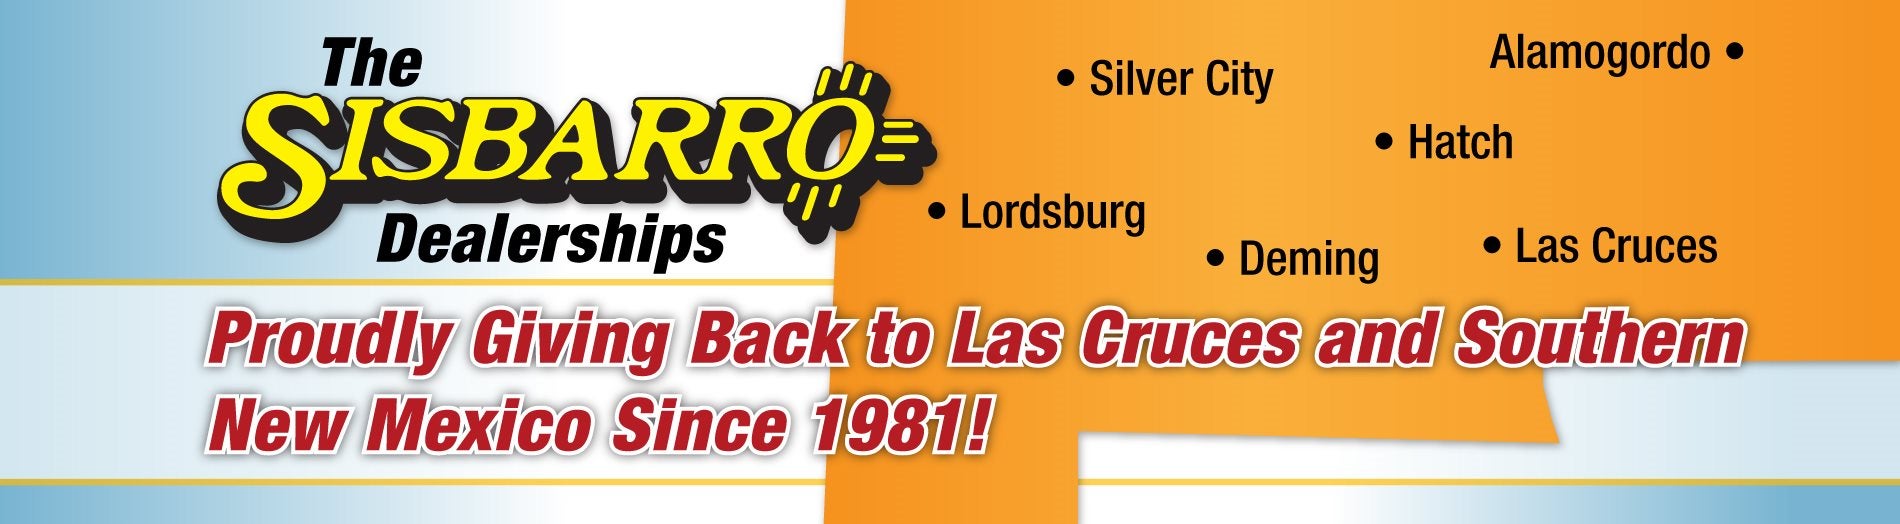 The Sisbarro Dealerships in Las Cruces NM